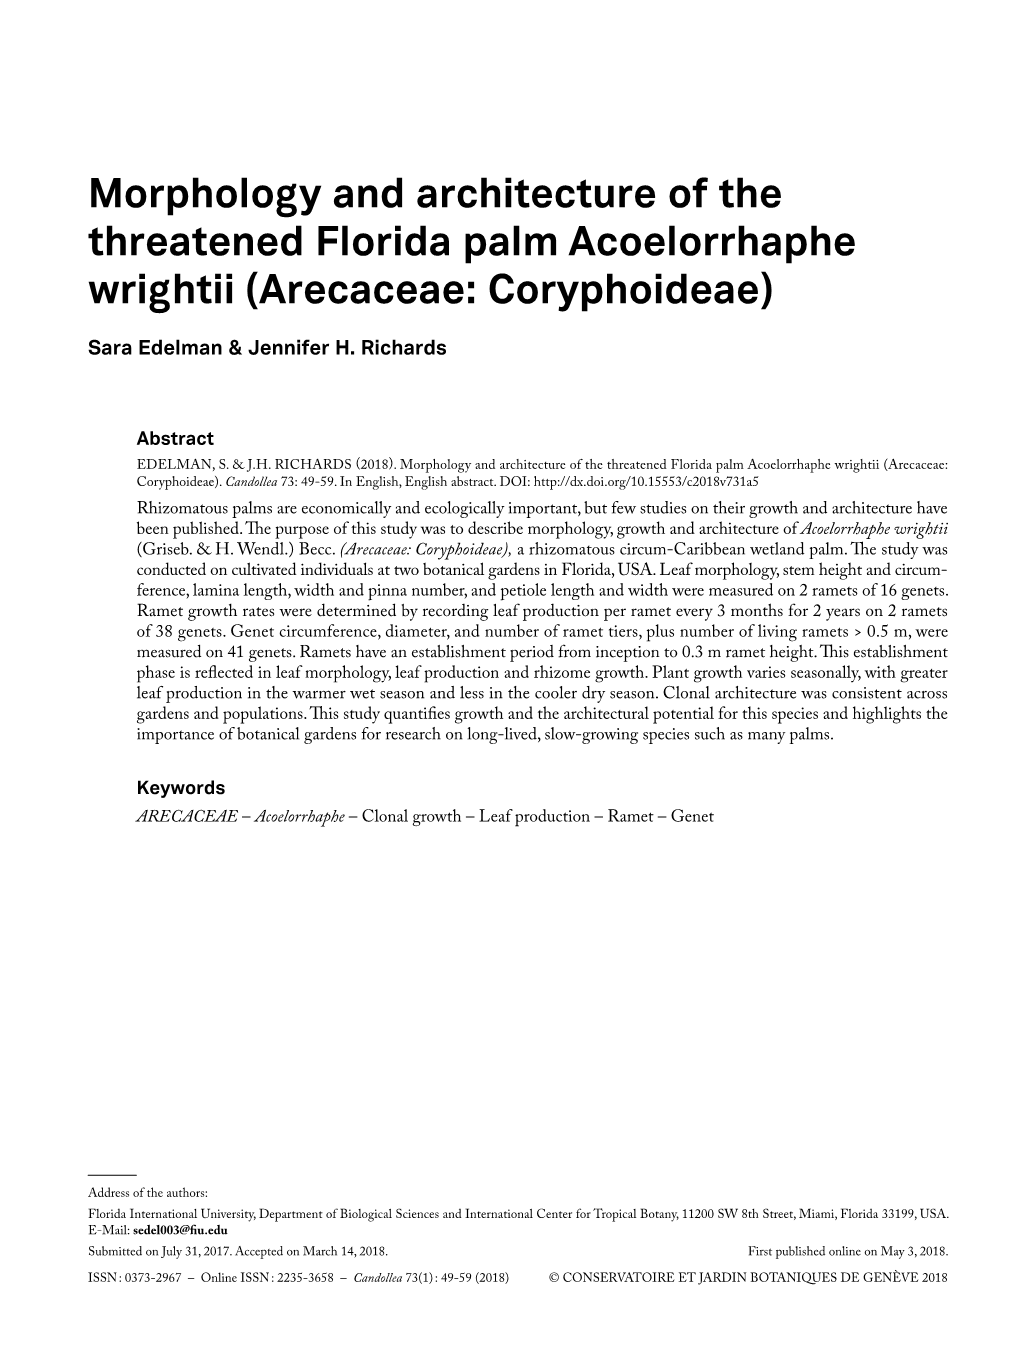 Morphology and Architecture of the Threatened Florida Palm Acoelorrhaphe Wrightii (Arecaceae: Coryphoideae)